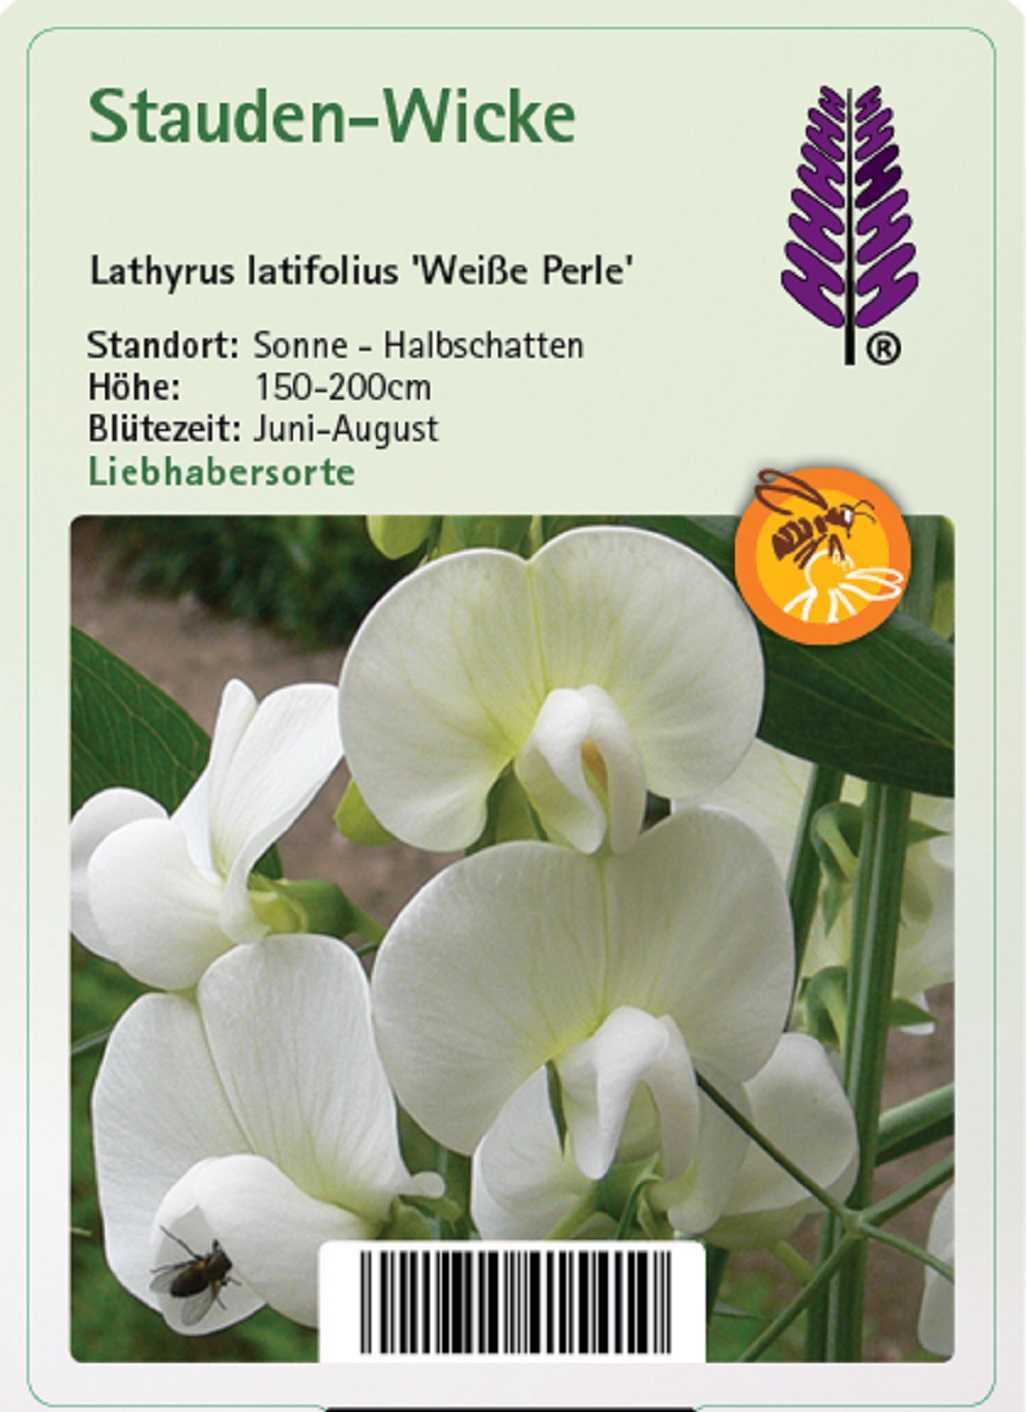 Stauden-Wicke - Lathyrus latifolius 'Weiße Perle', 11cm Topf